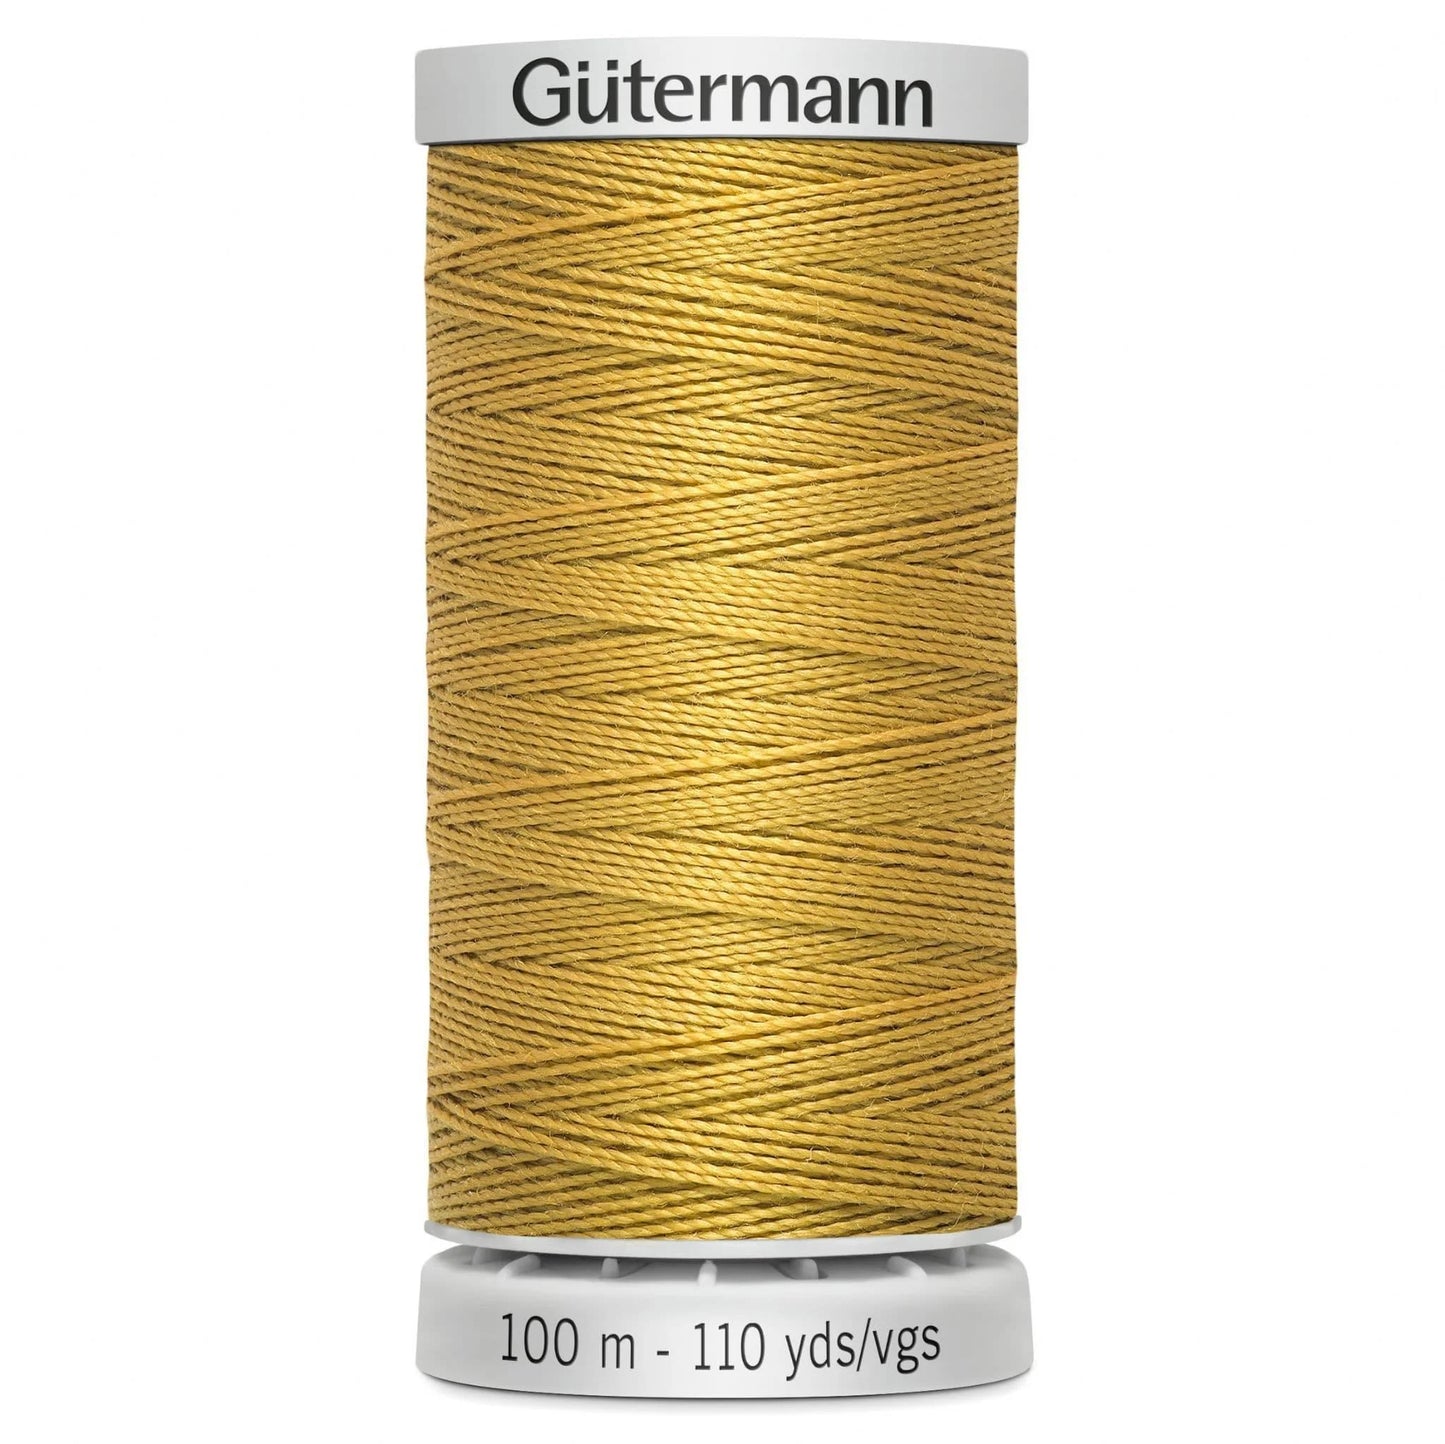 968 Gutermann Extra Strong Thread 100m - Mustard